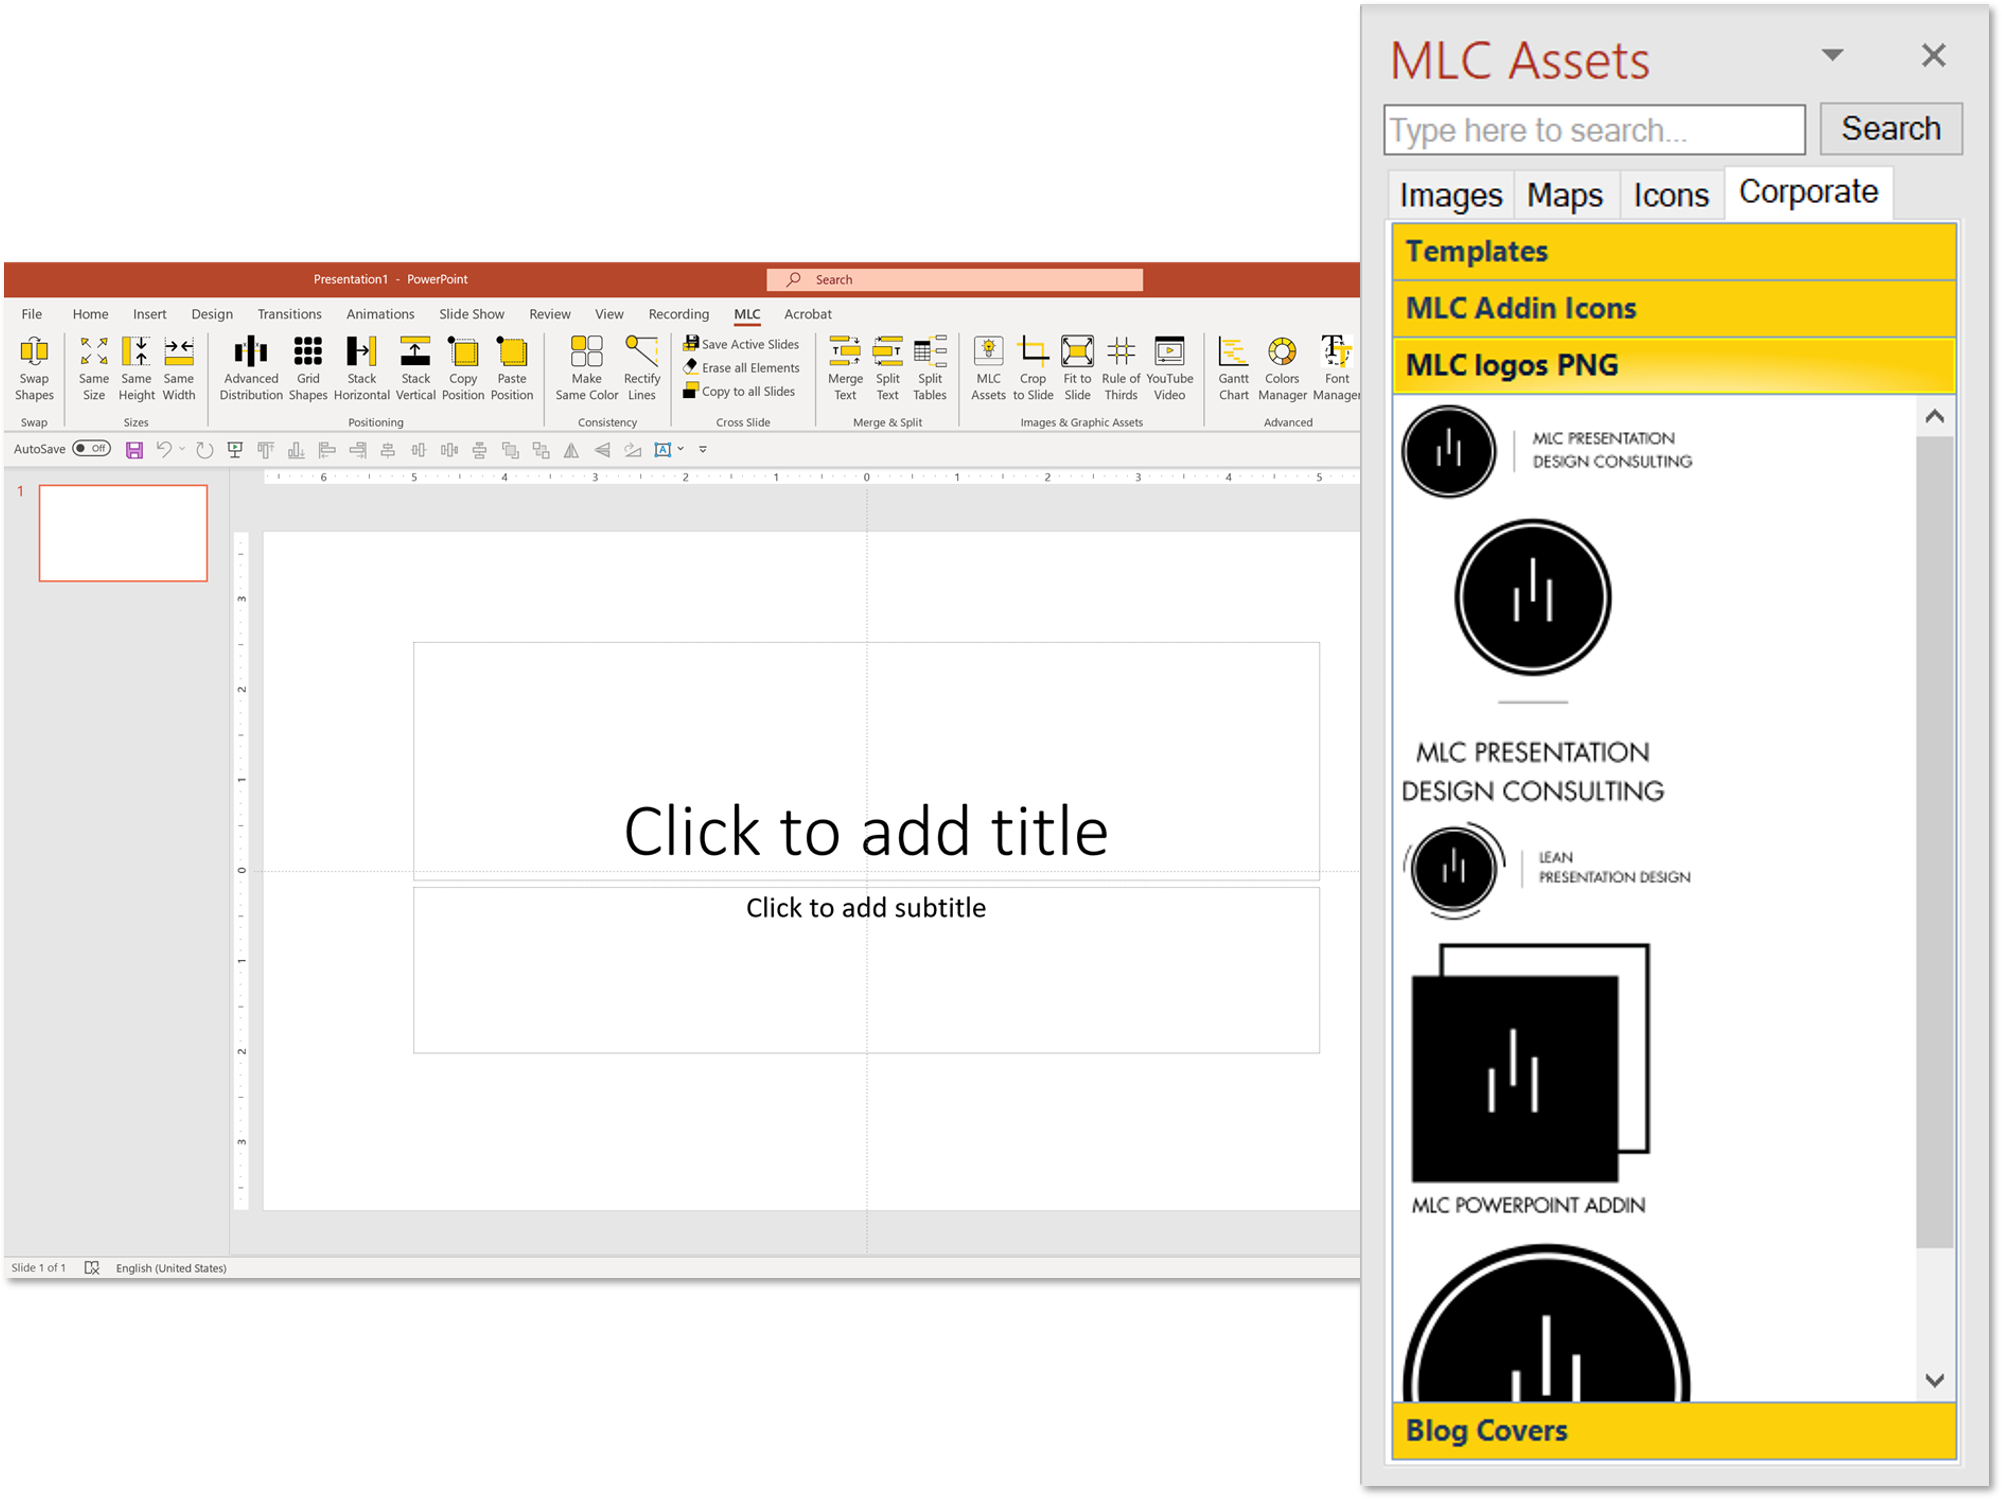 MLC Presentation Design Consulting